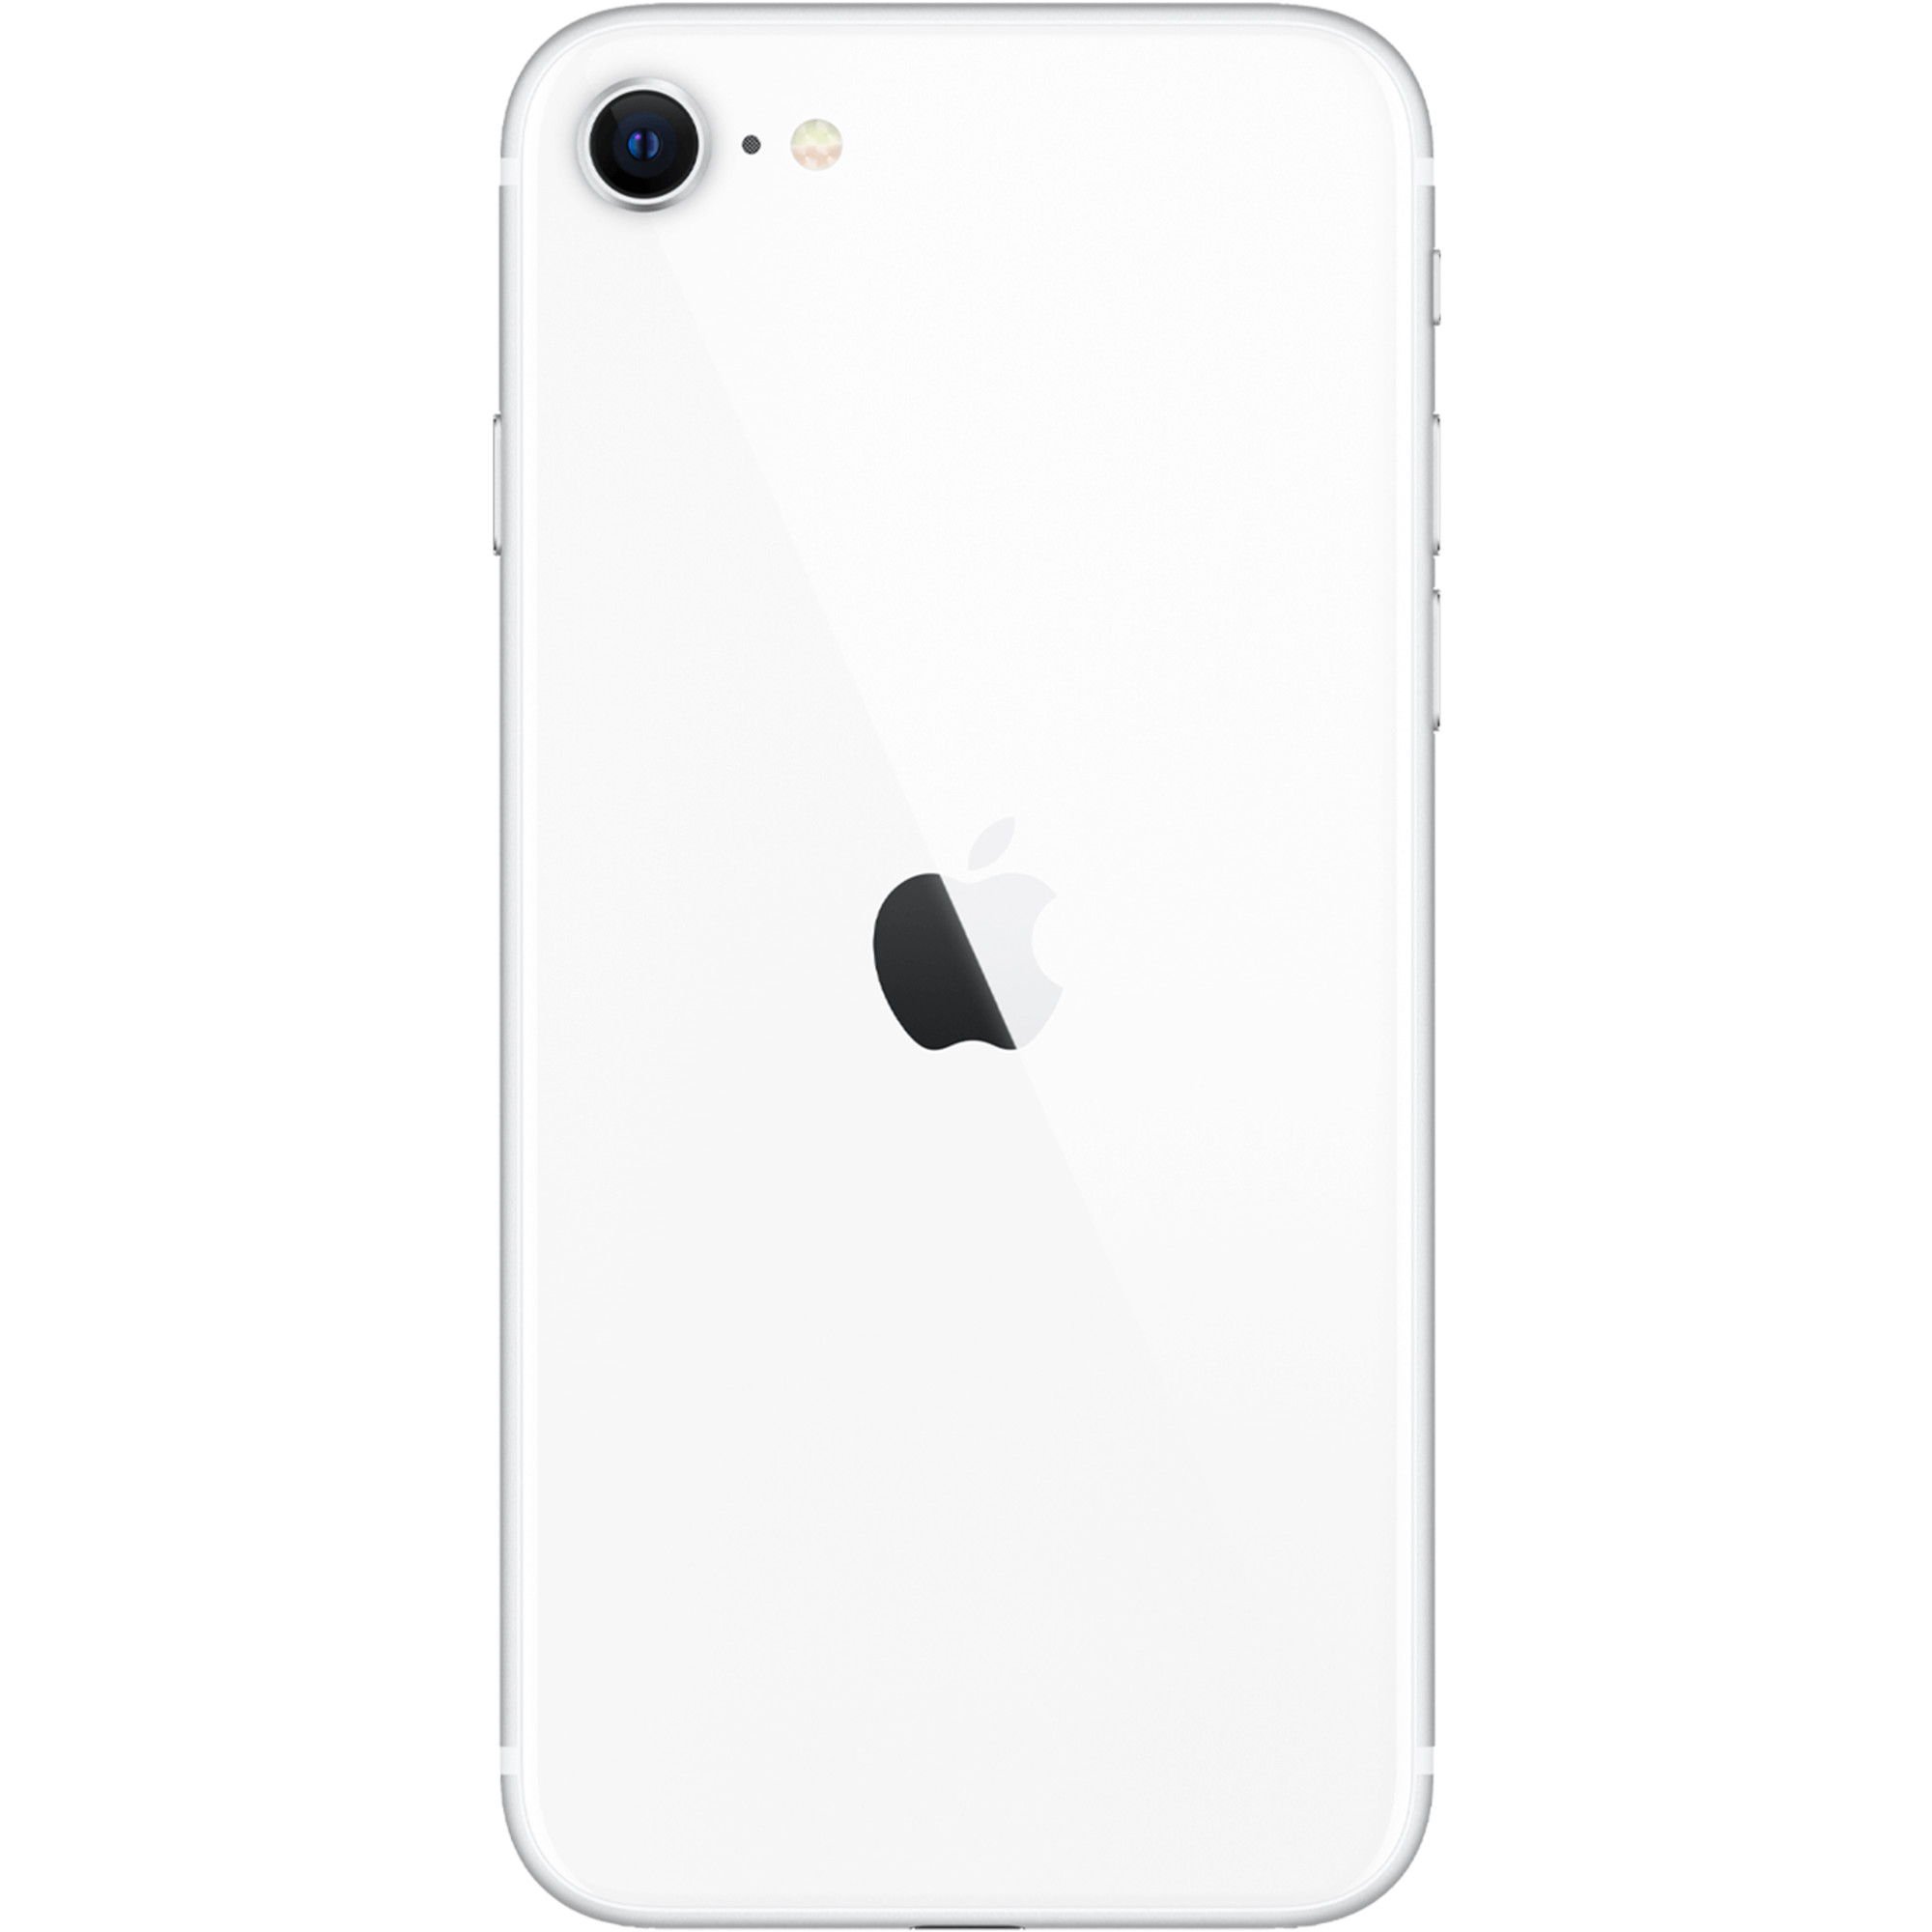 Apple iPhone SE (2020) 64GB GSM/CDMA Fully Unlocked Phone - White (Grade B Used) - image 3 of 4